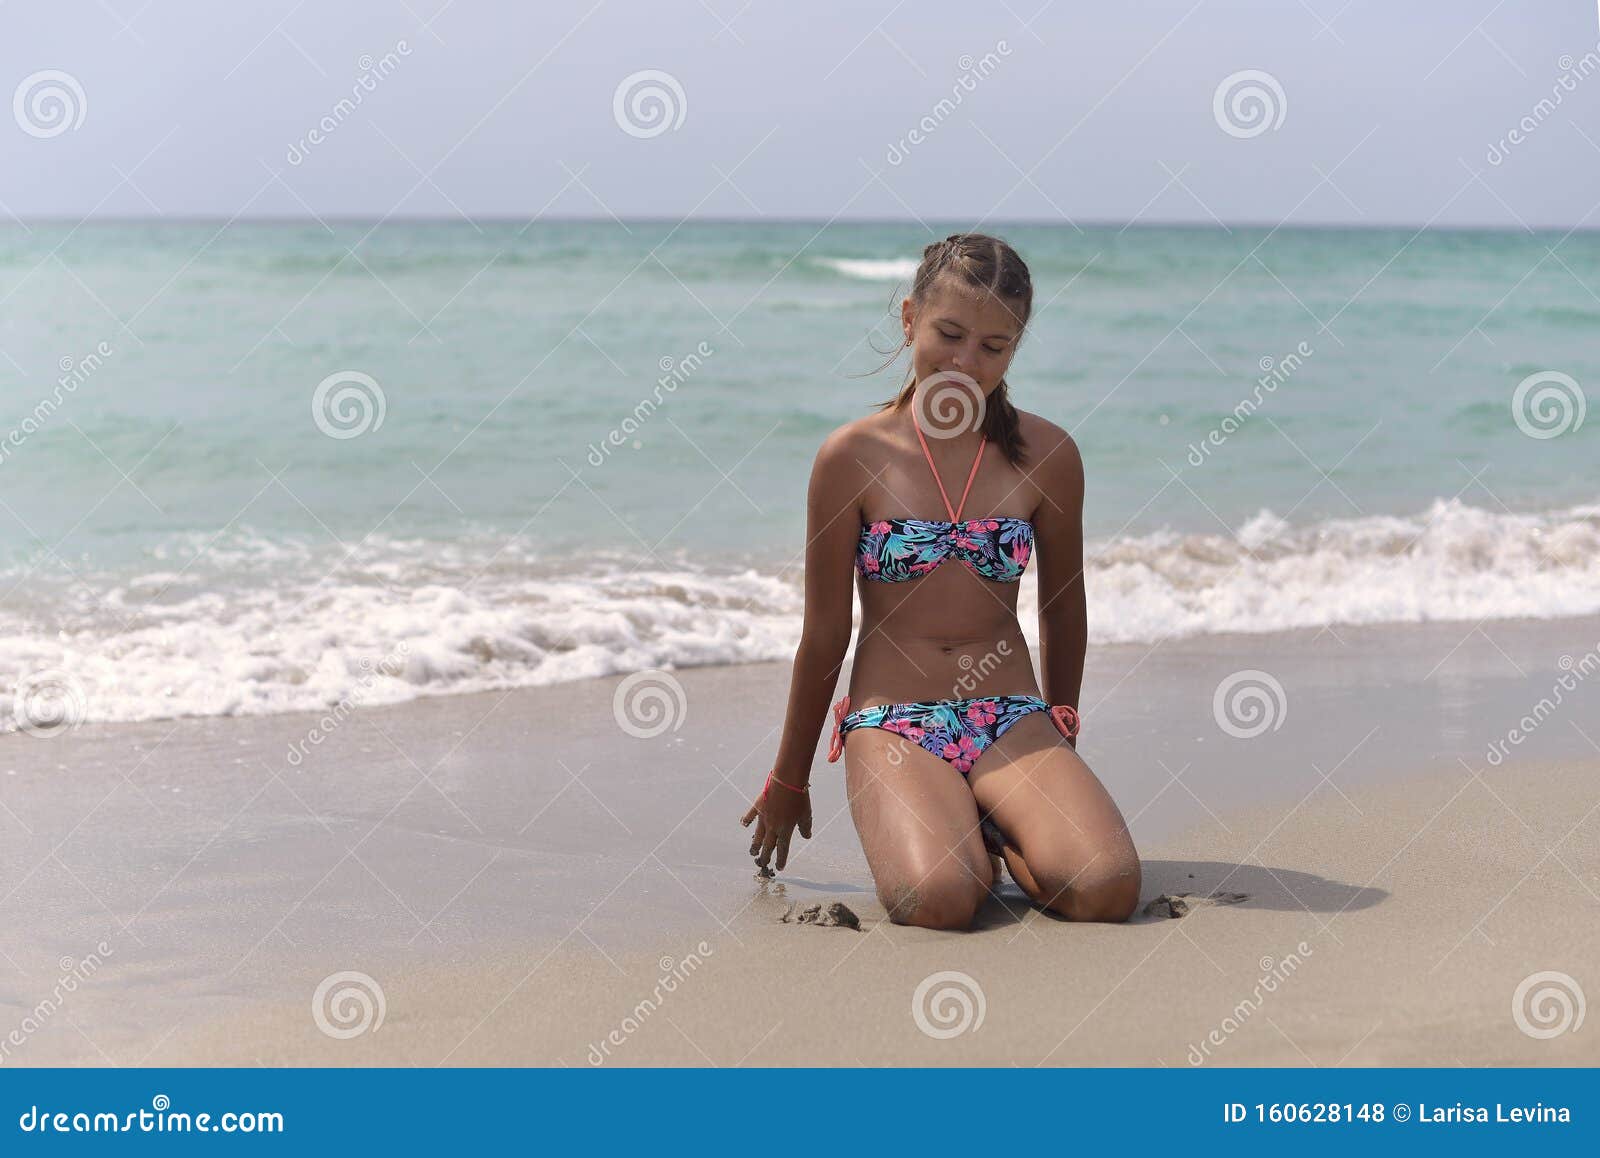 ahmed rifat add photo teen beach nudism